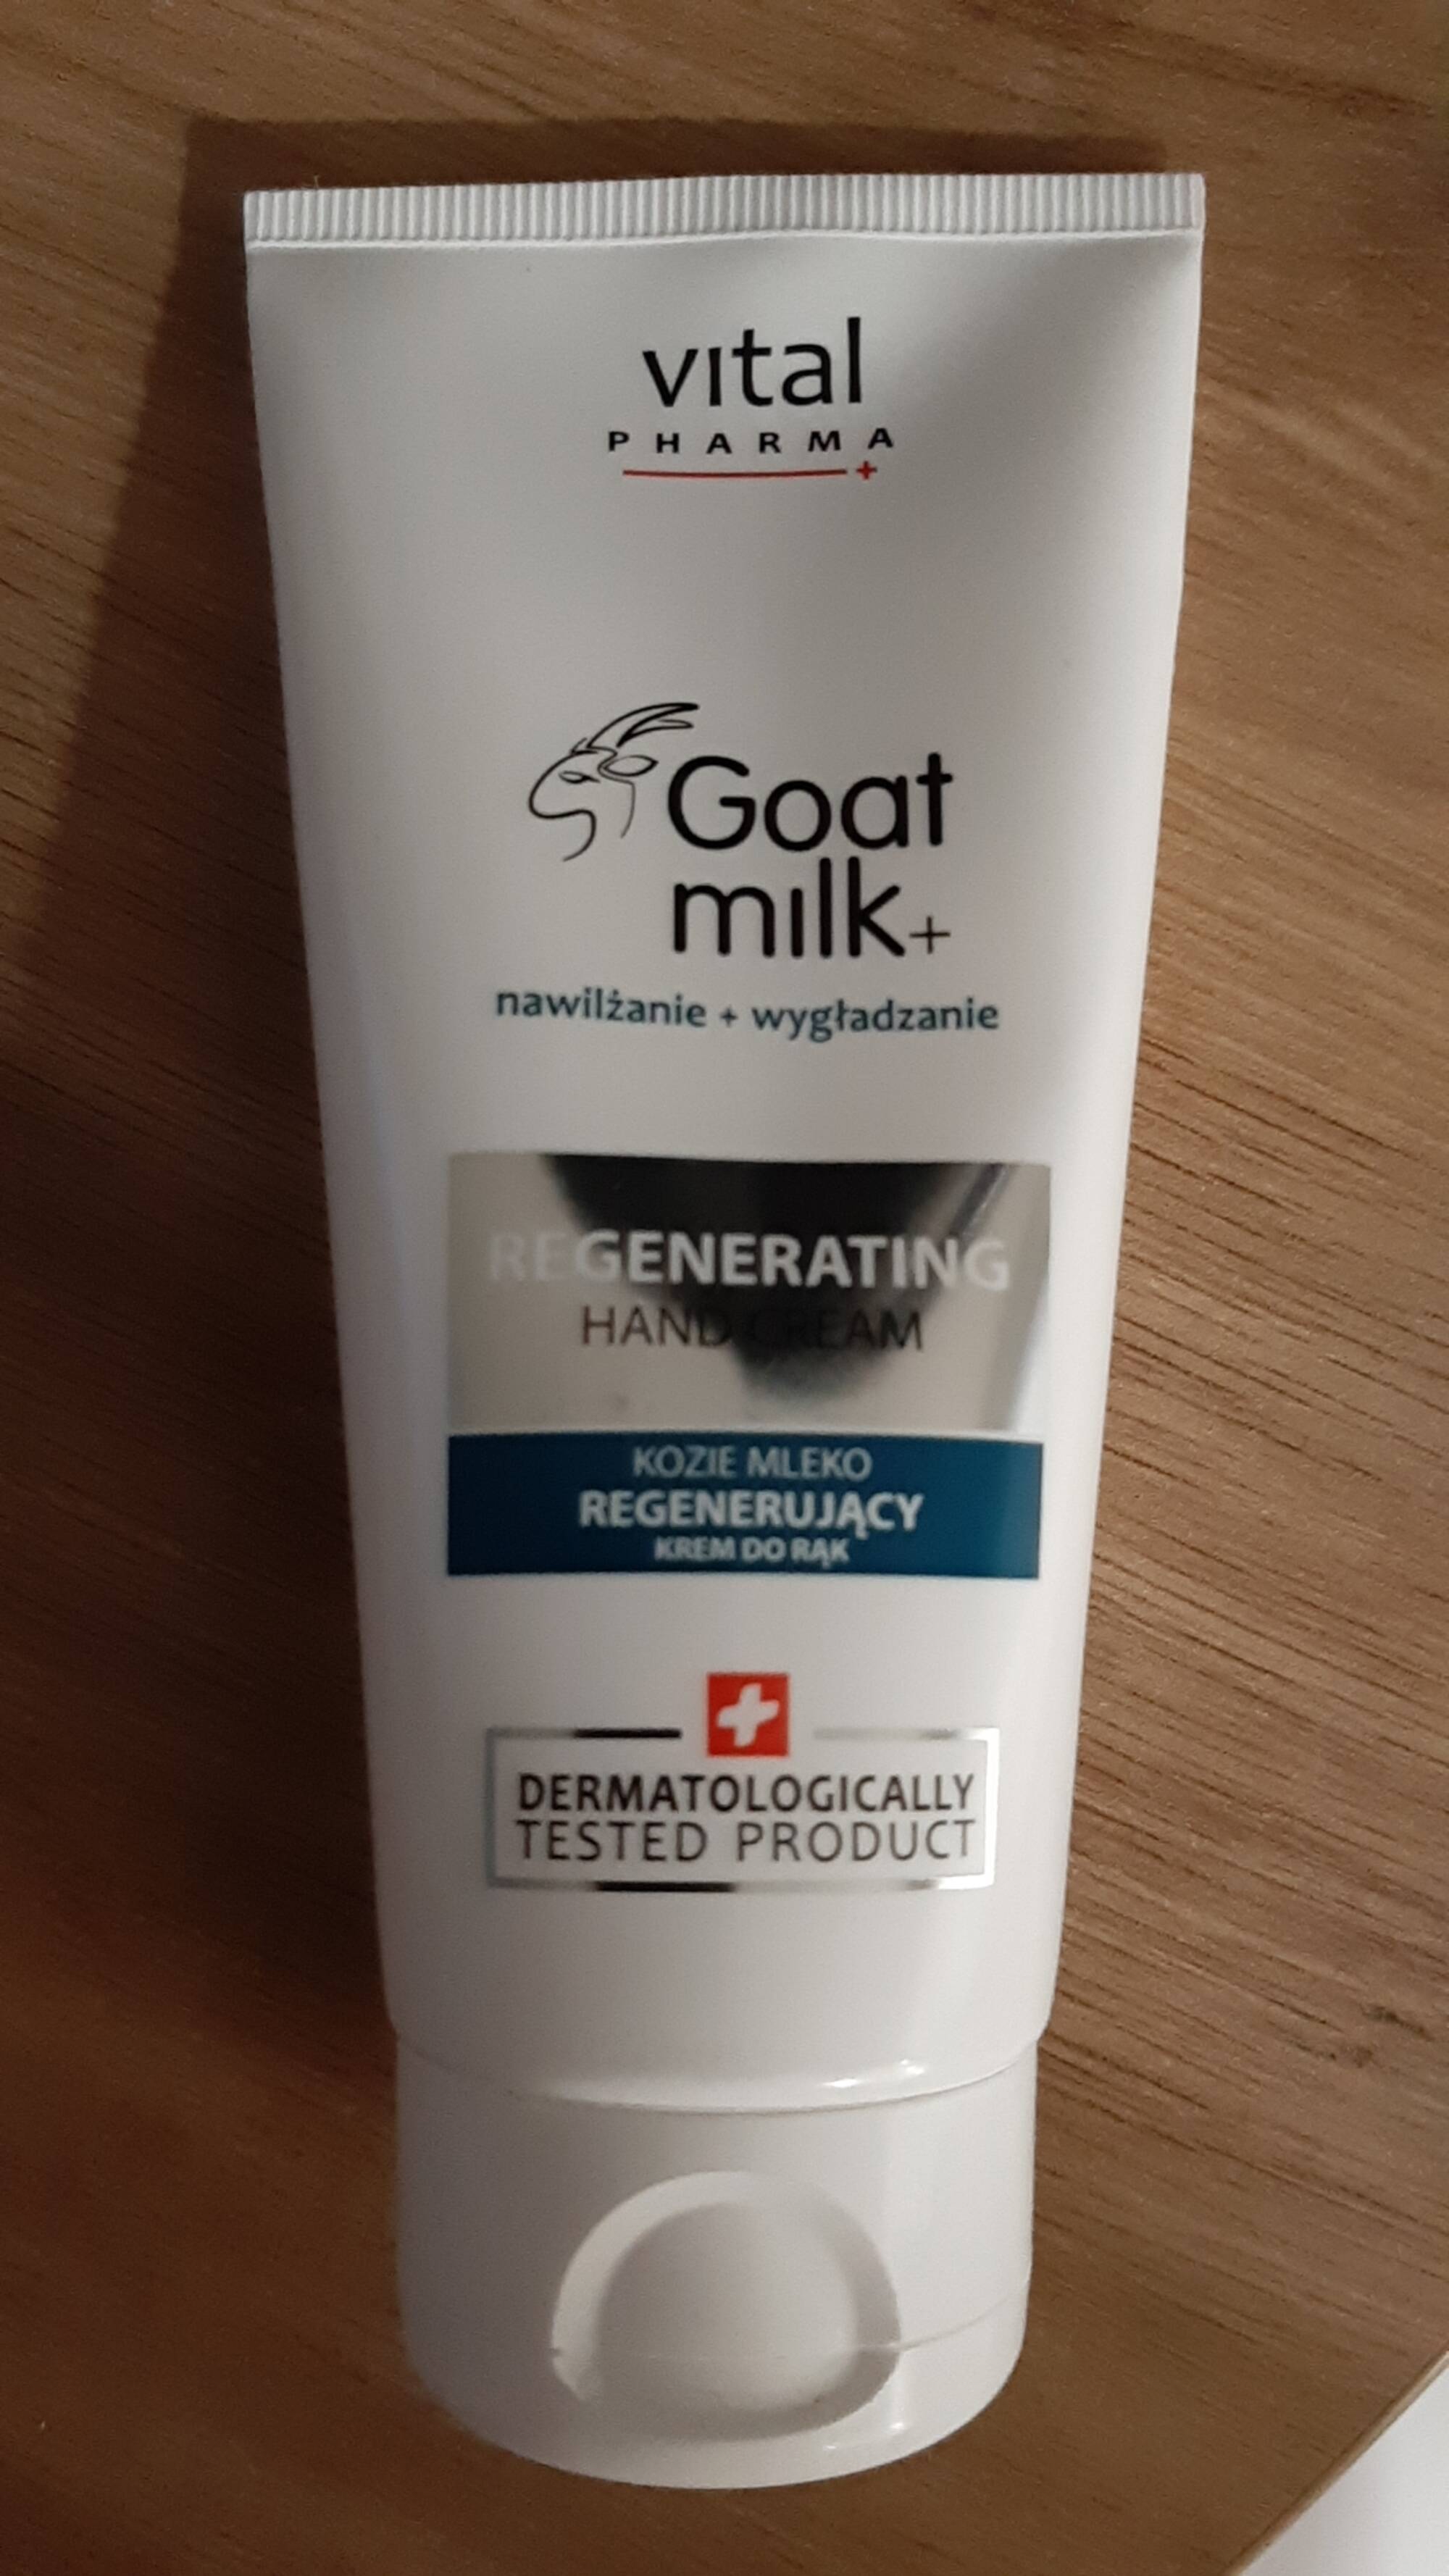 VITAL PHARMA - Goat milk+ - Regenerating hand cream